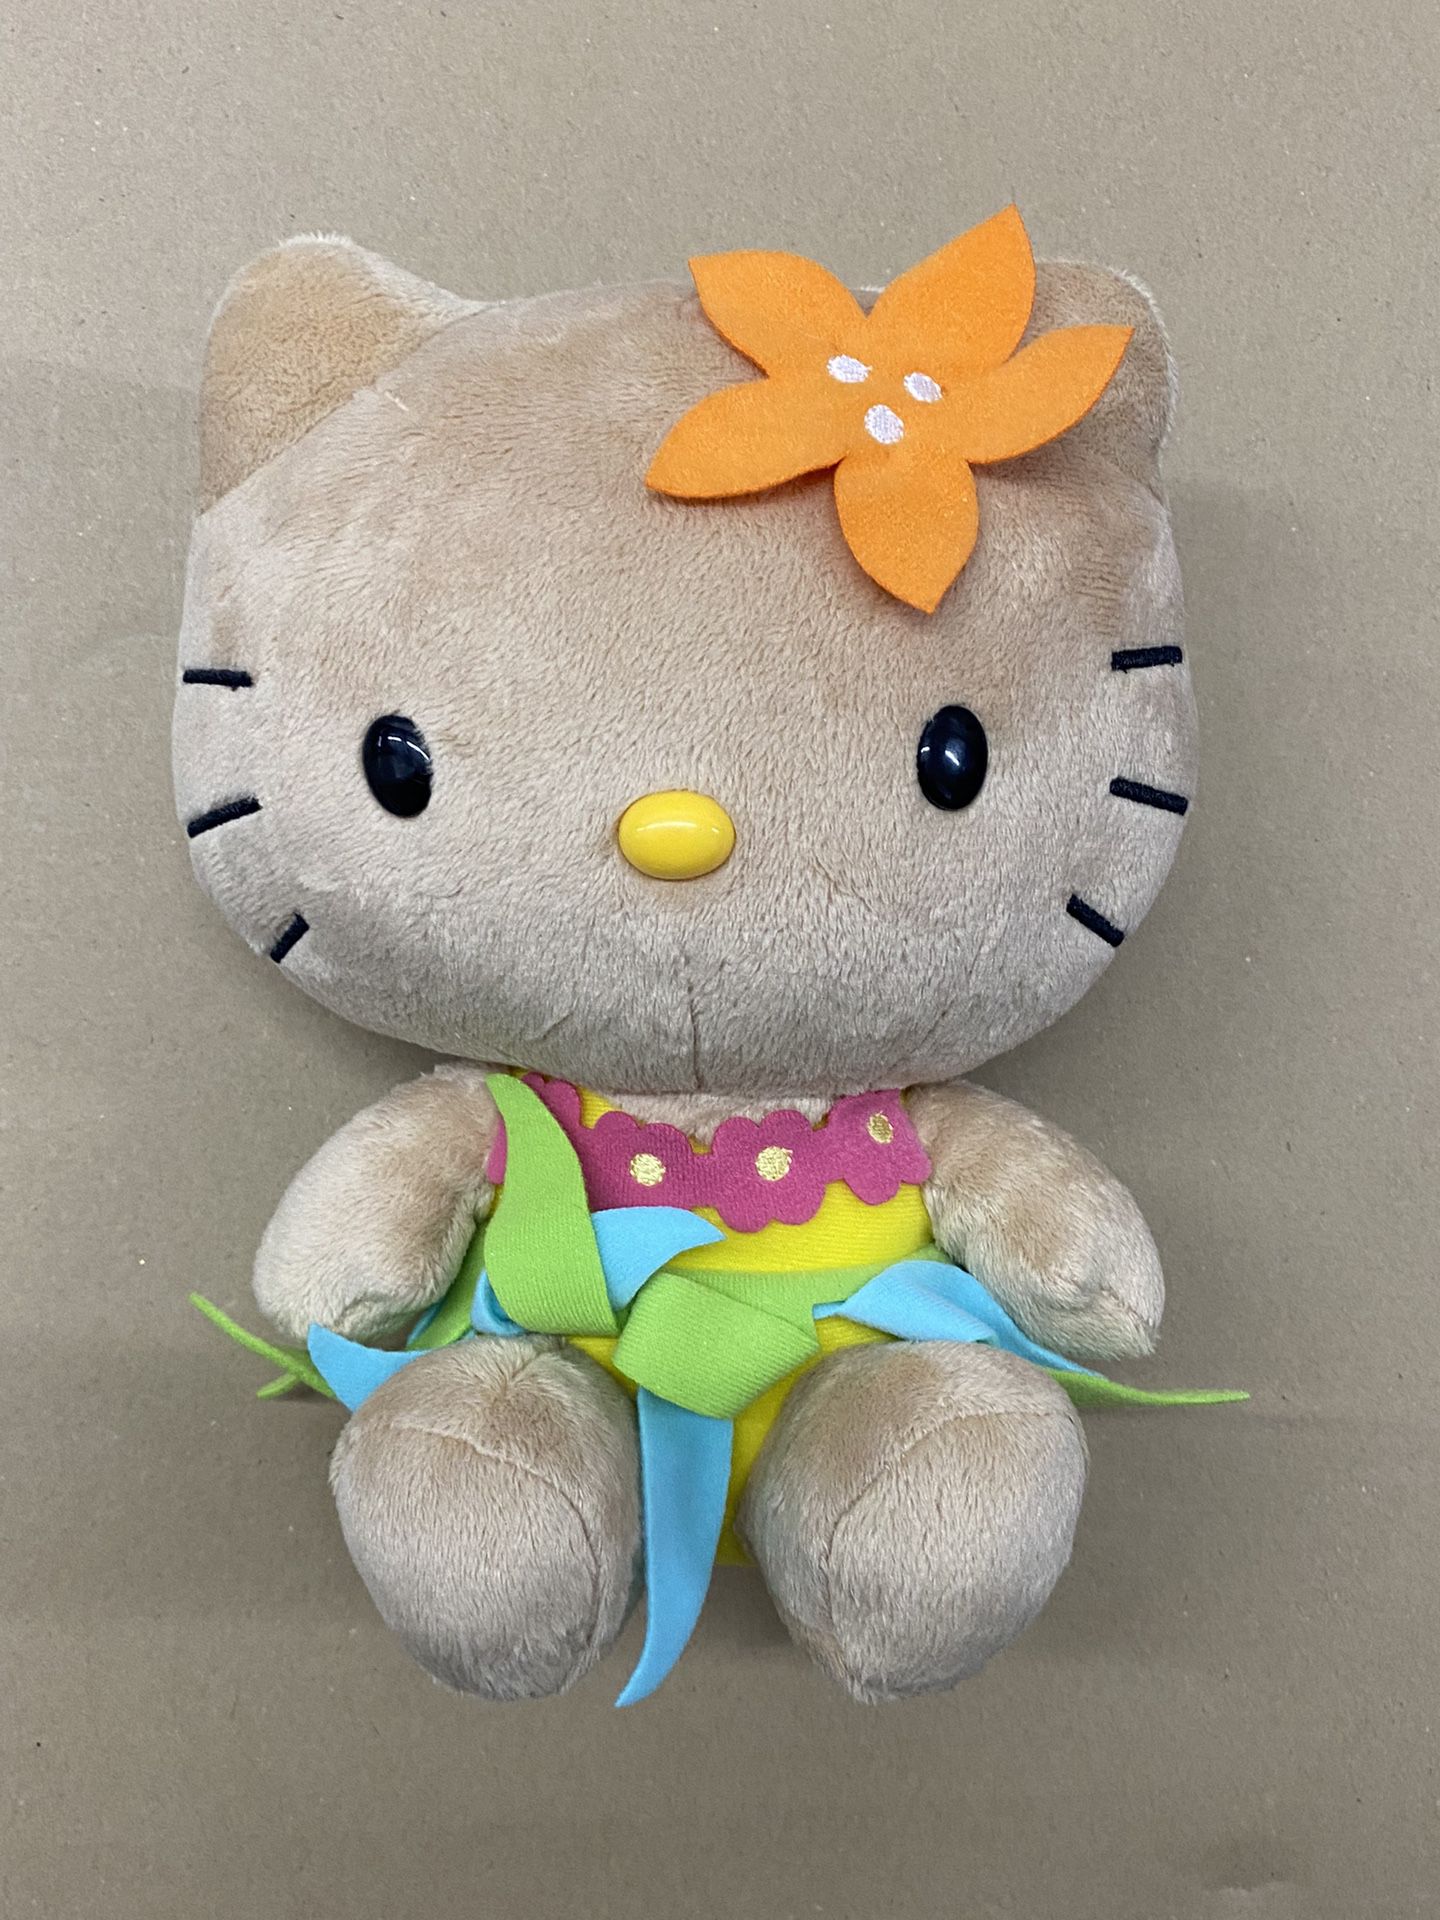 2013 Hello Kitty Sanrio Tan Sunkissed Hawaiian 9.5” Plush with Hula Outfit GUC